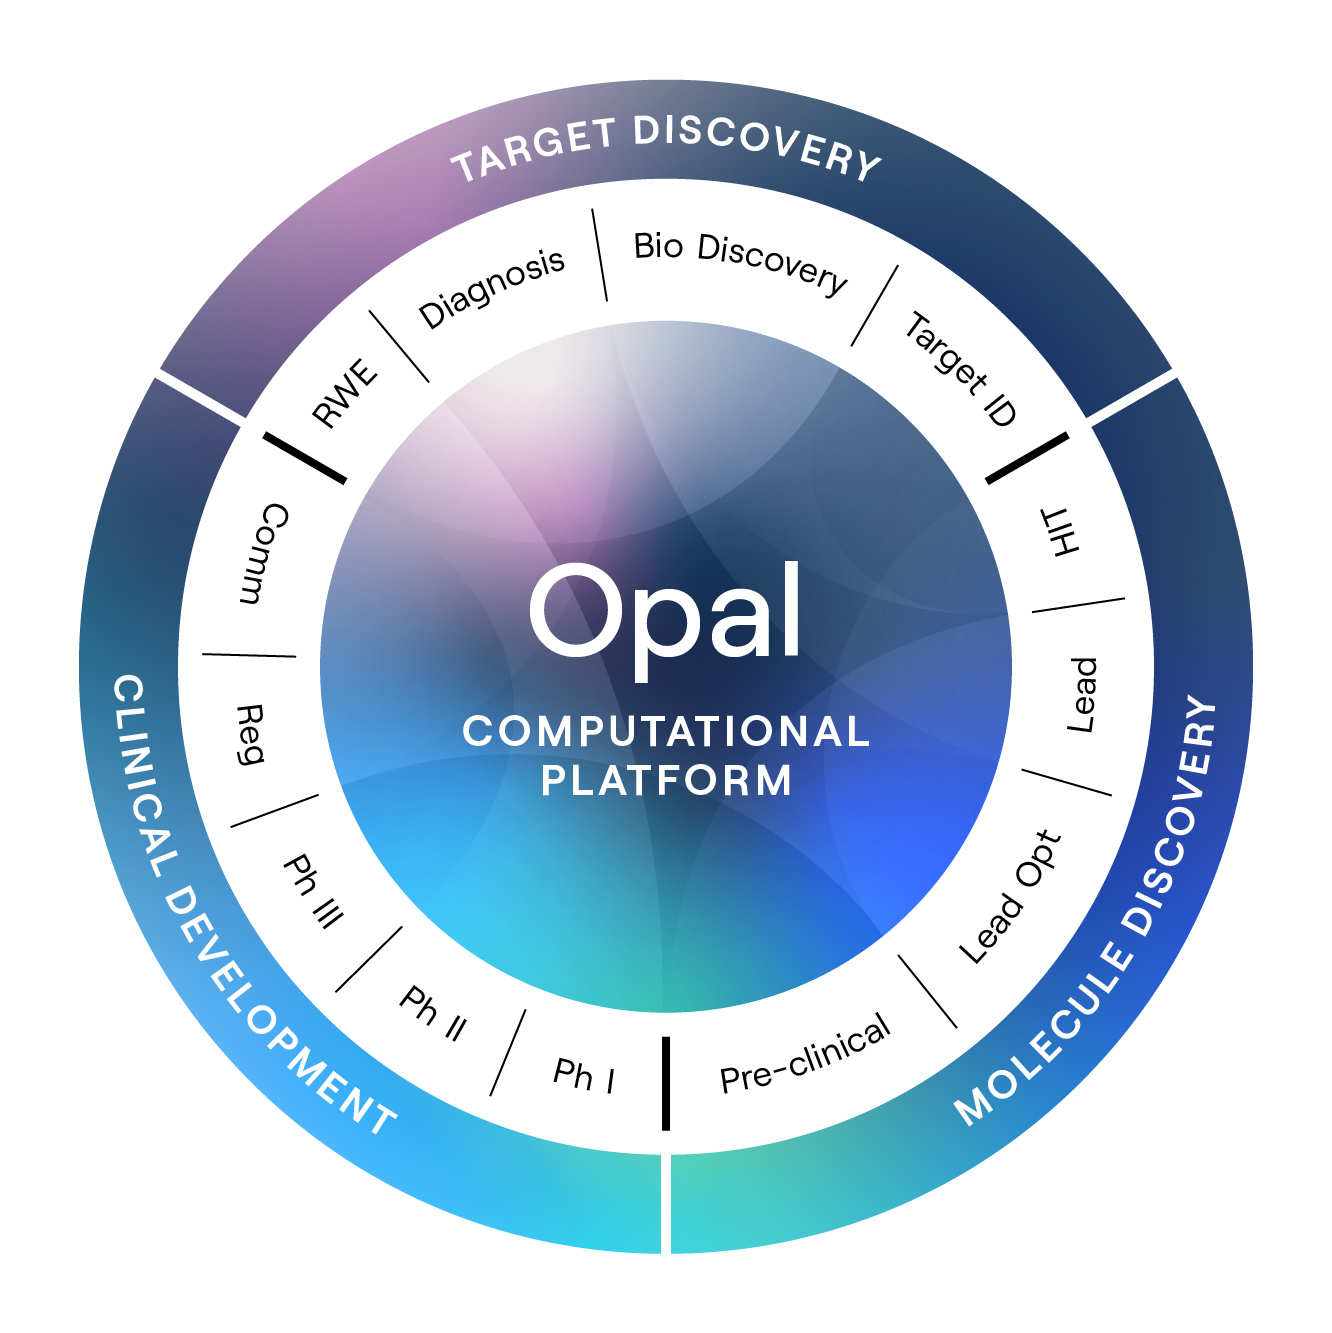 Opal Computational Platform